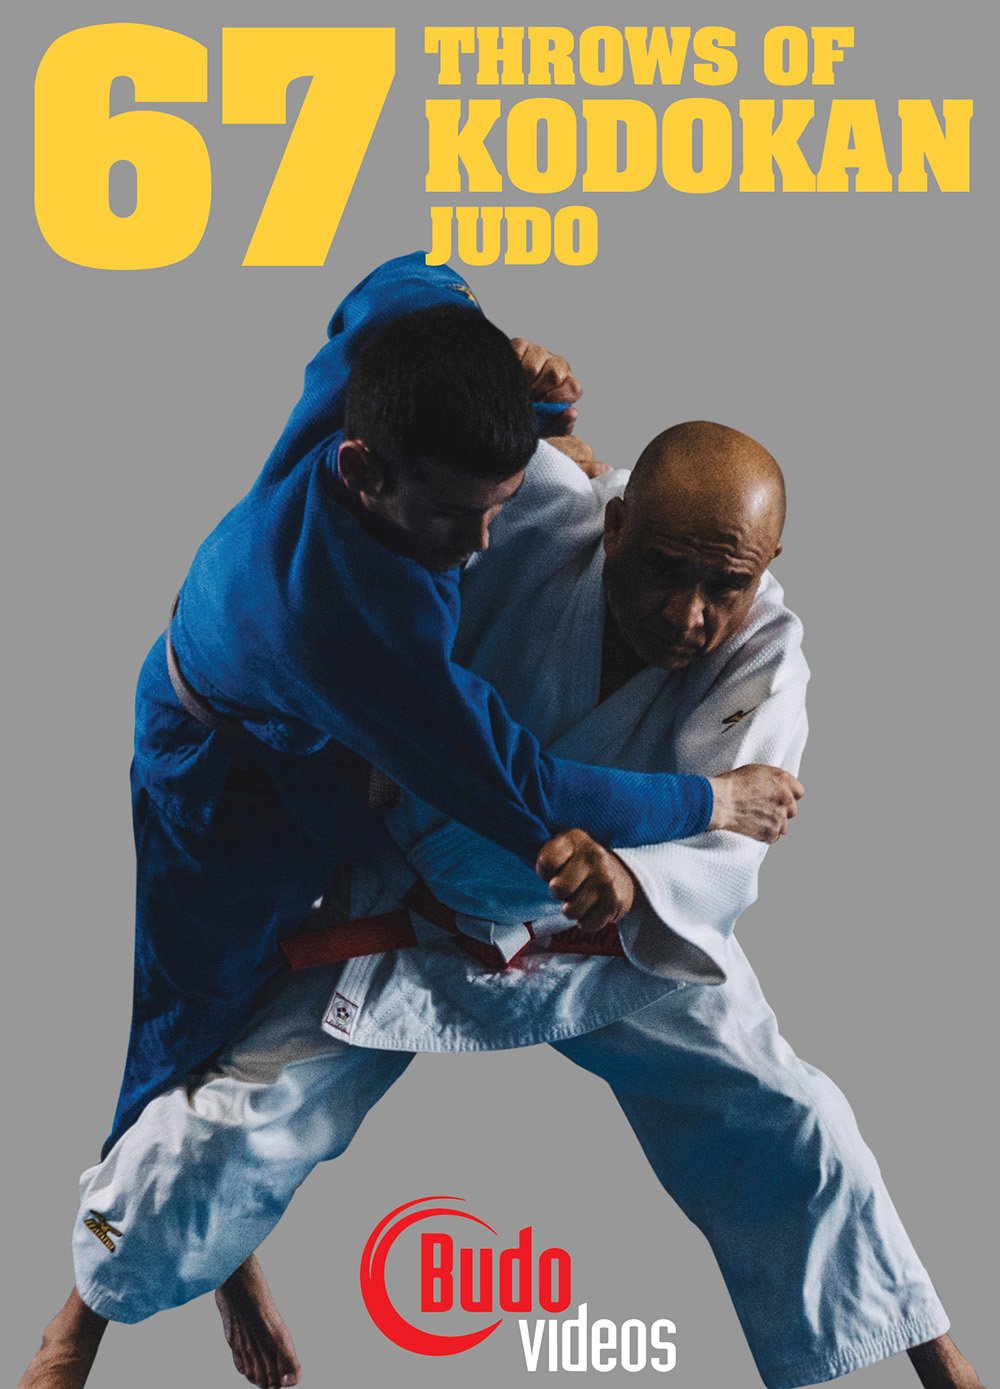 67 Throws of Kodokan Judo DVD or Blu-ray by Juan Montenegro - Budovideos Inc